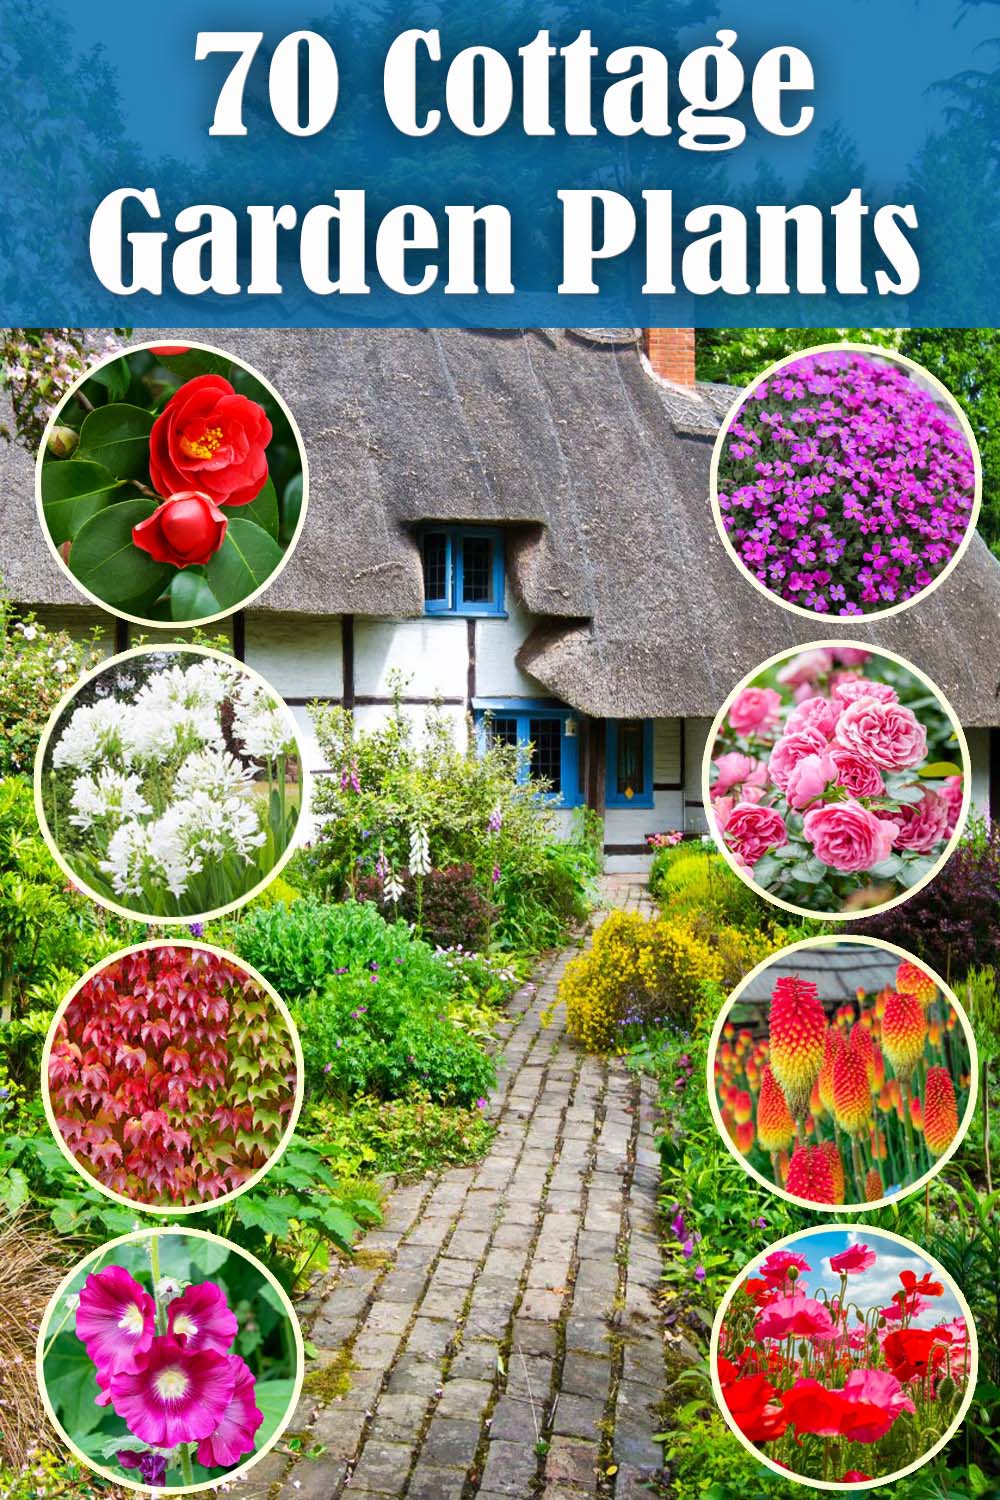 Plants for cottage gardens